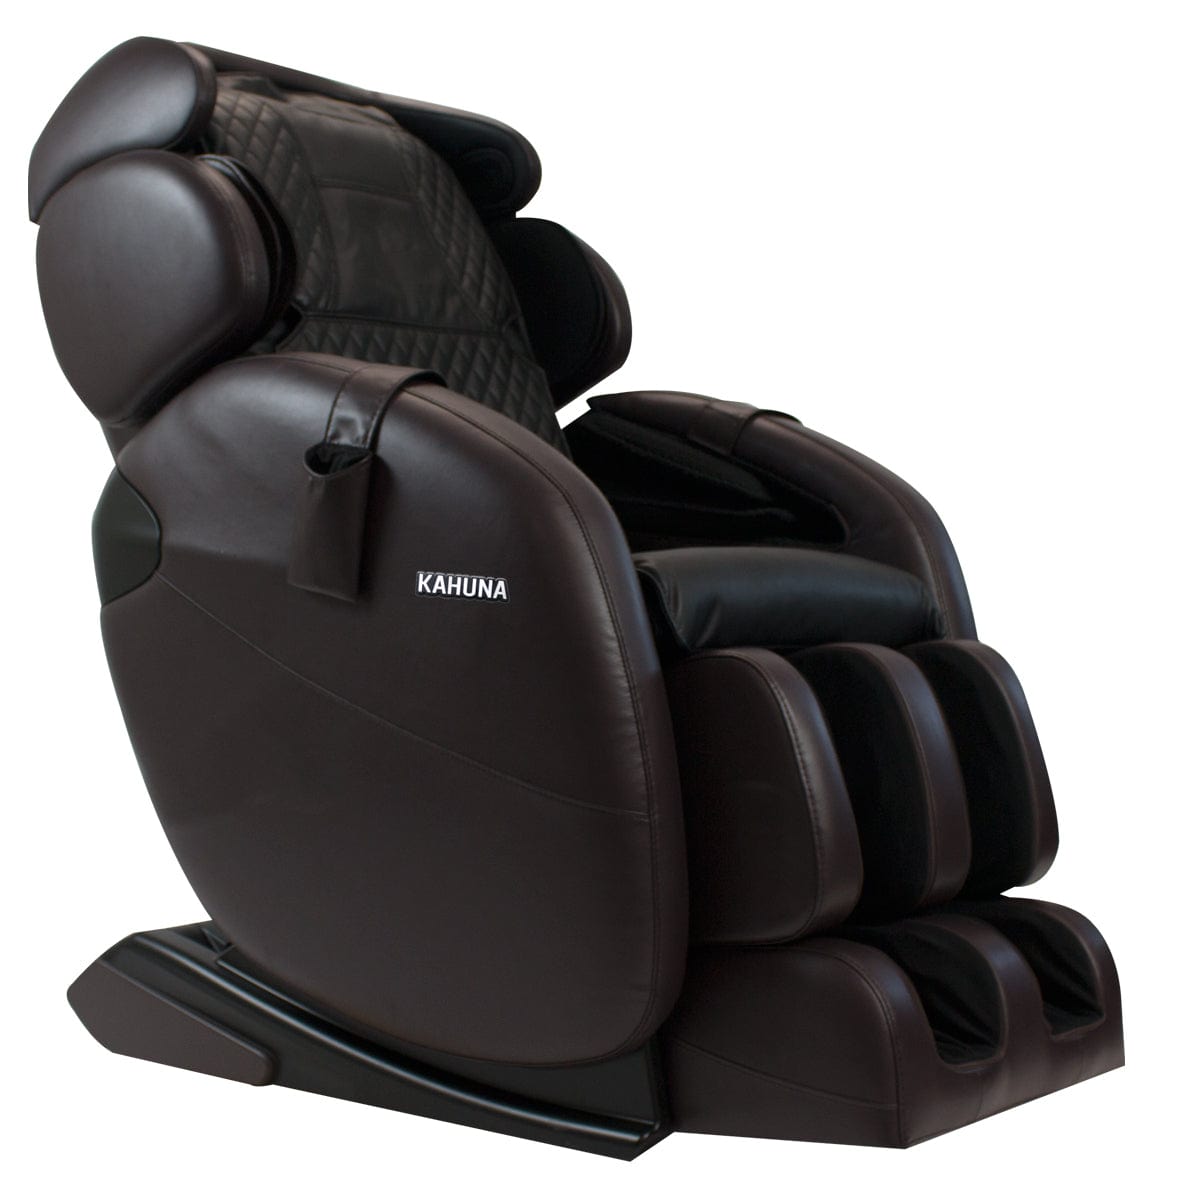 Kahuna Chair – LM 6800S [Black] - Massage Chair